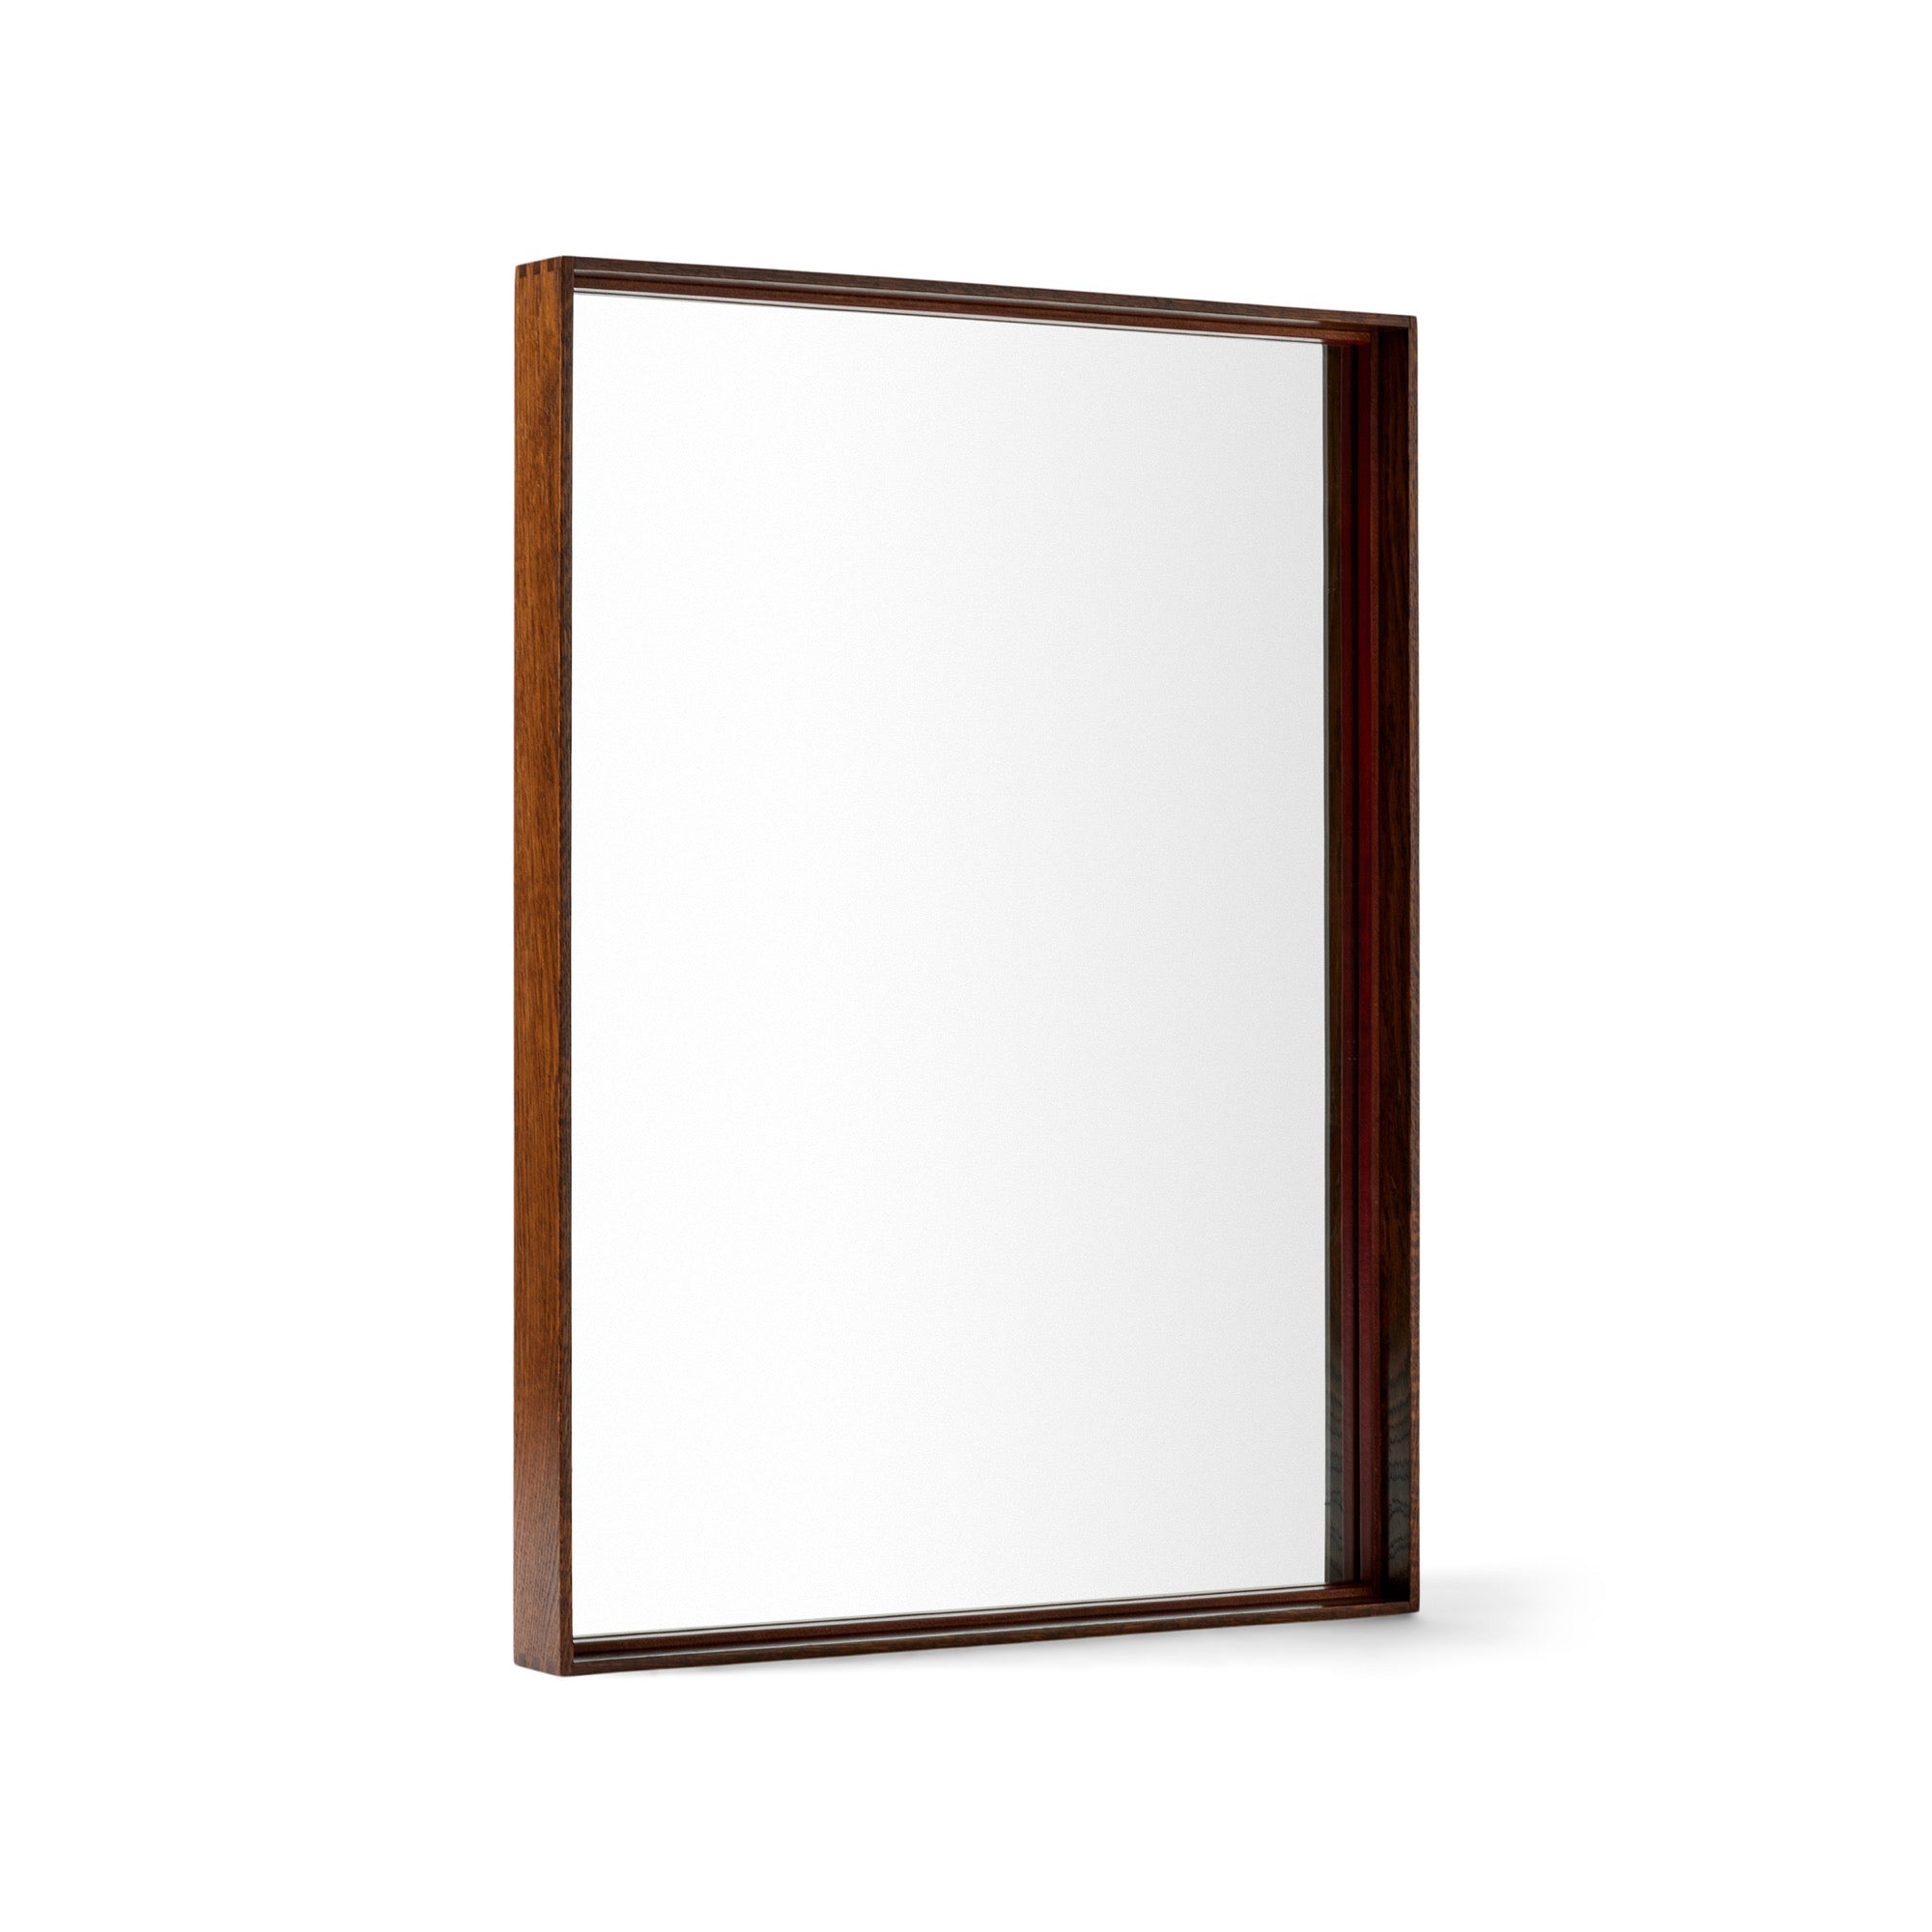 Original ‘Thin Line’ Solid Wood Mirror with Leather Trim by WYETH